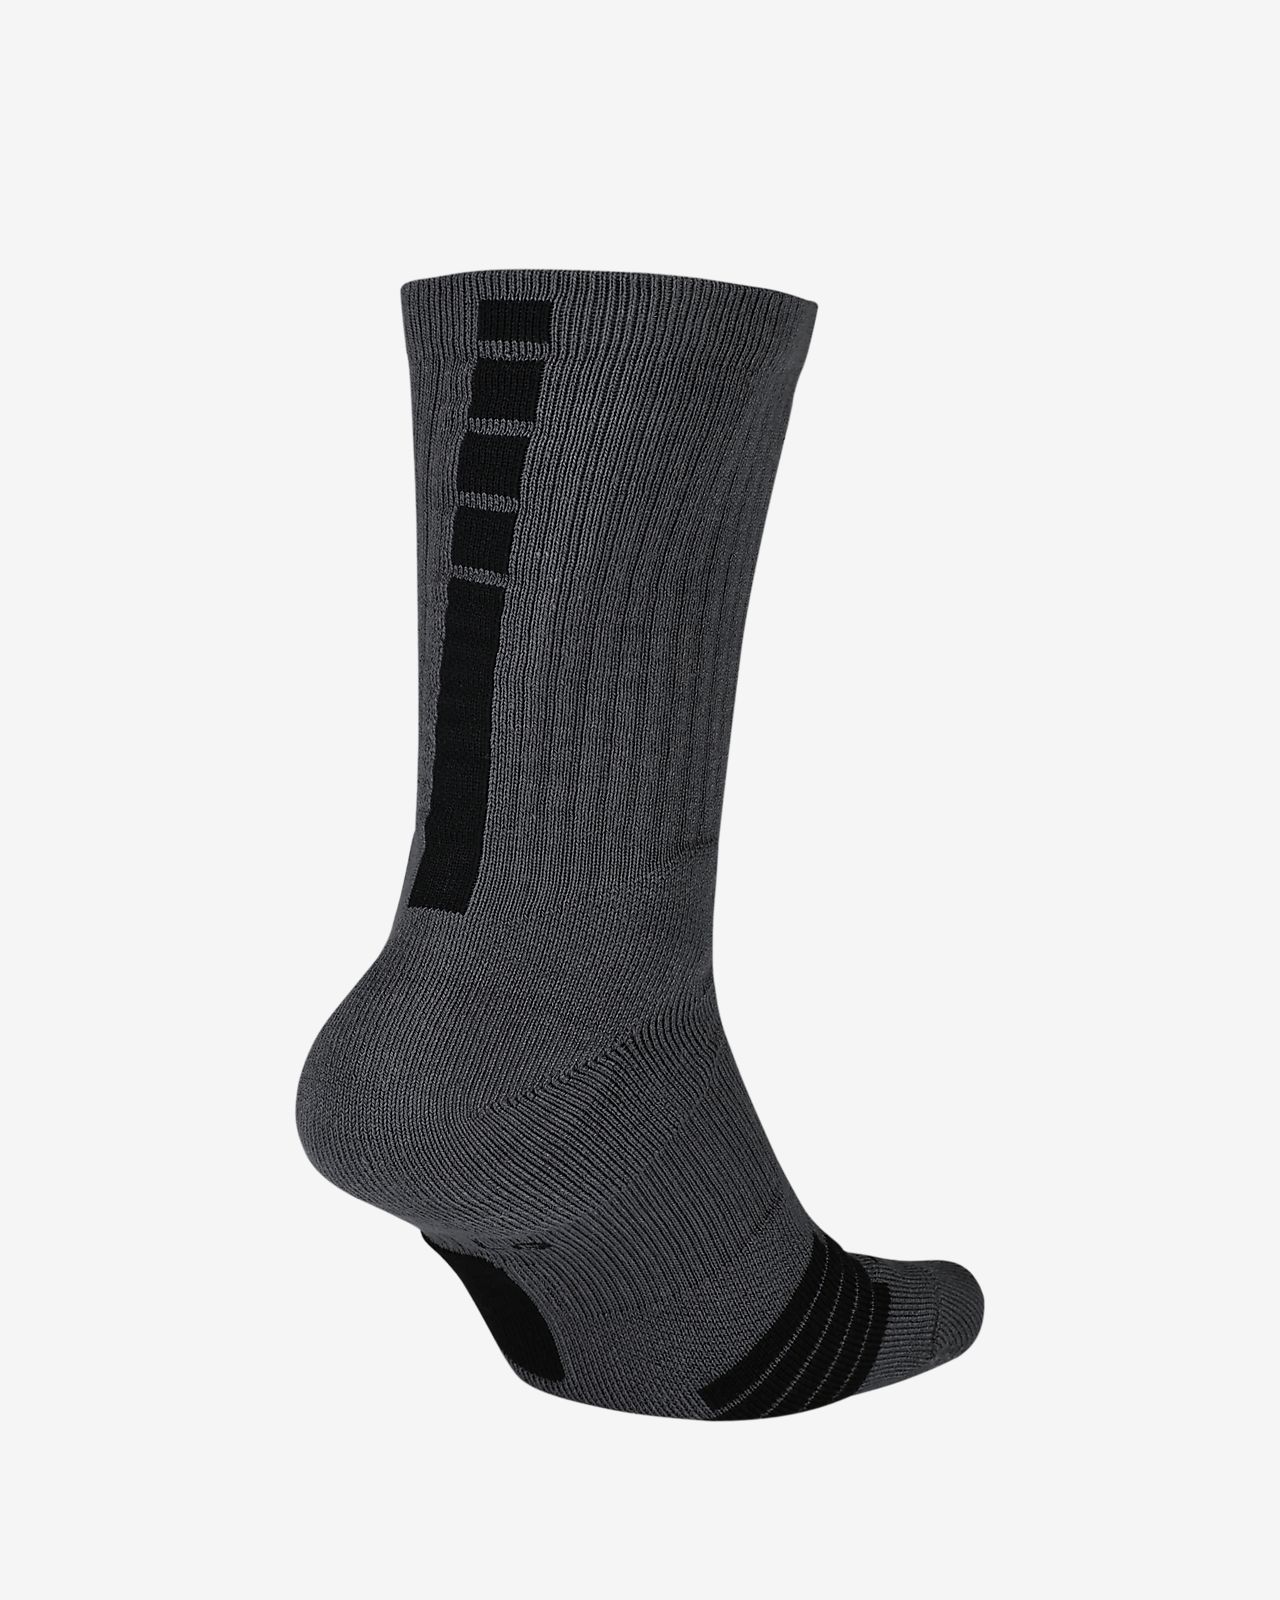 grey nike elite socks